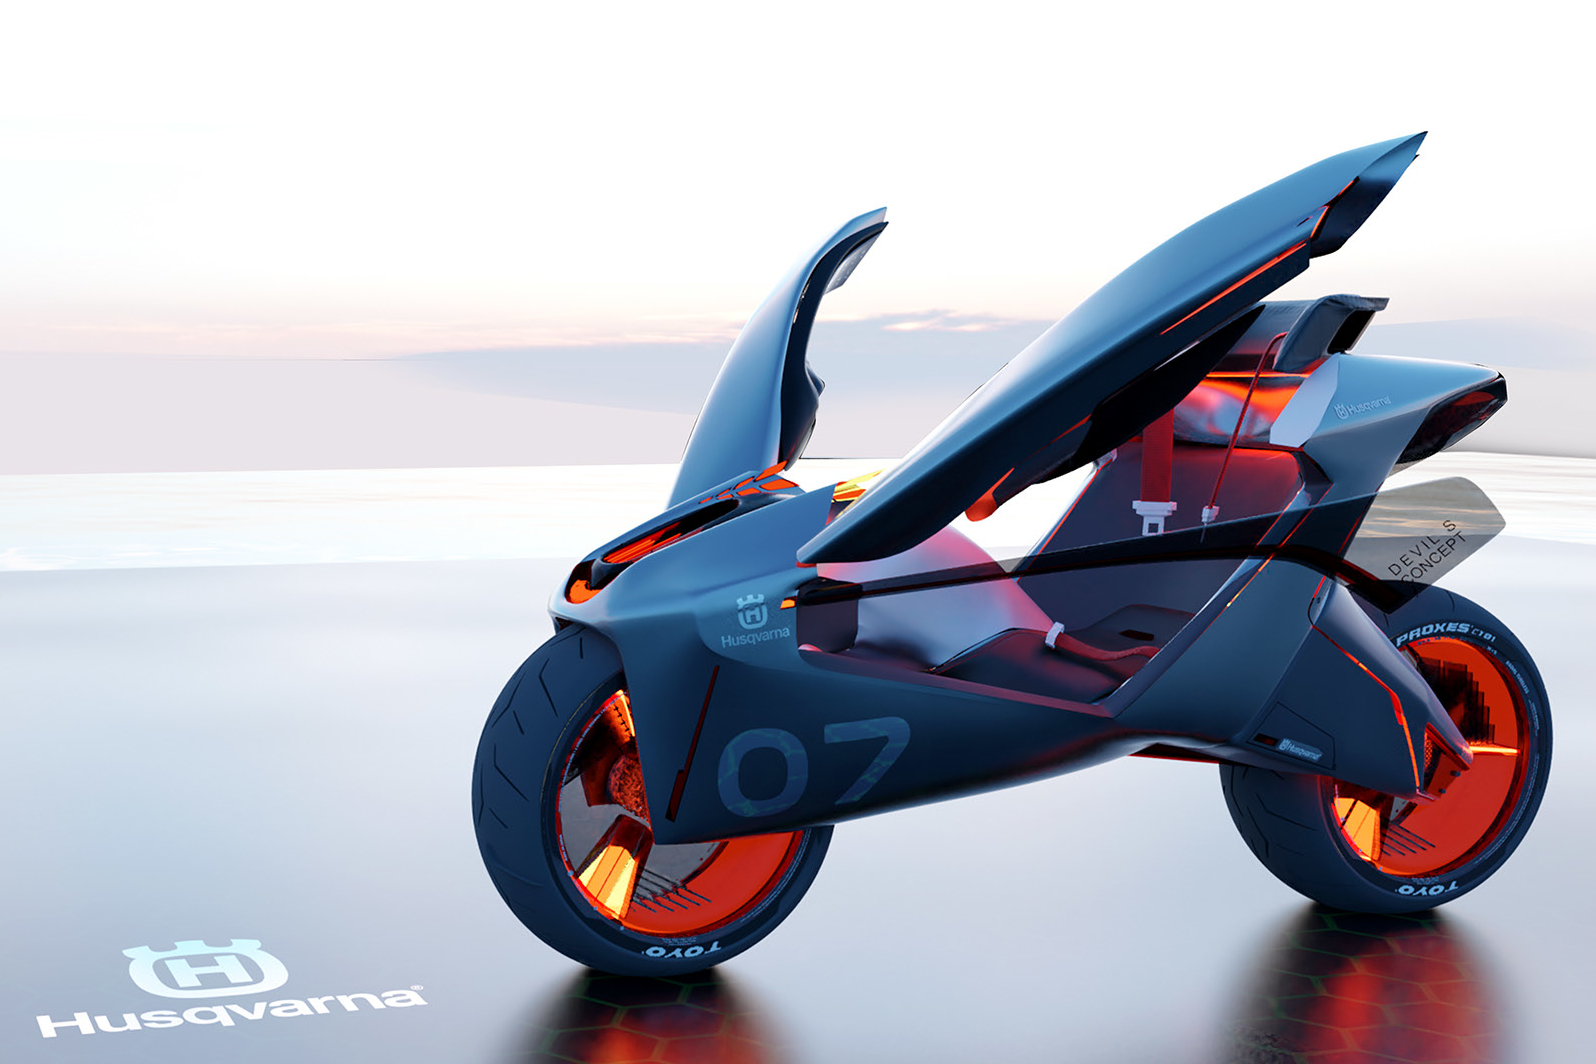 Así es la moto del futuro: Husqvarna Devil S Concept